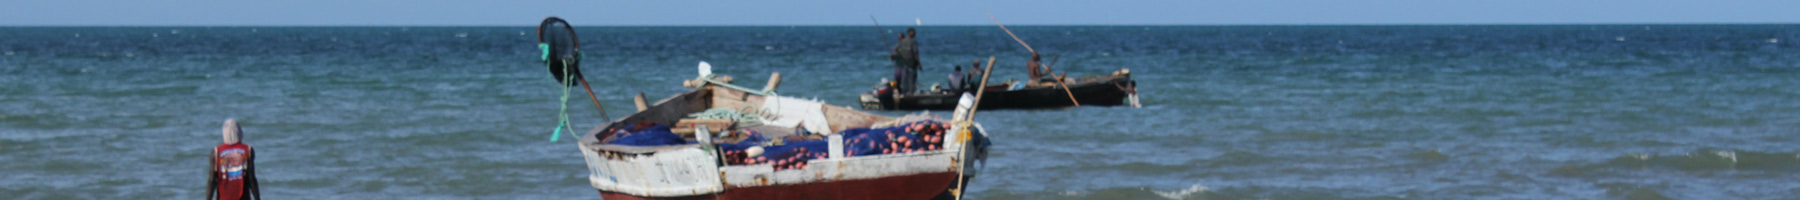 fishing boats near a shoreline